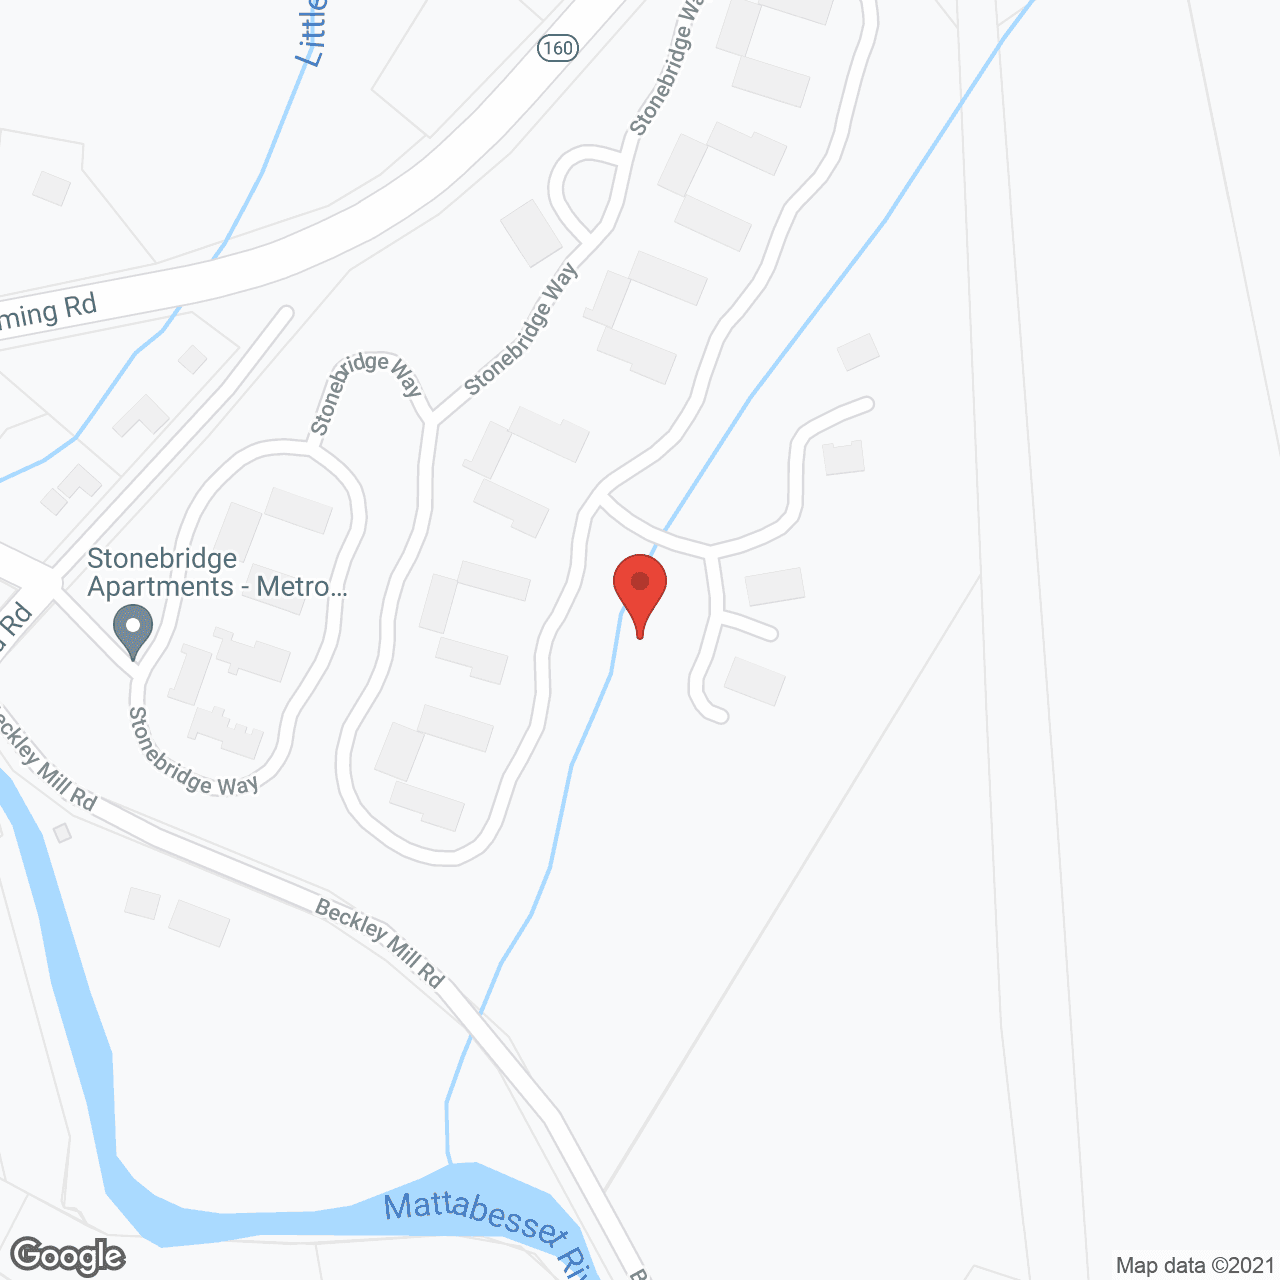 Stonebridge in google map